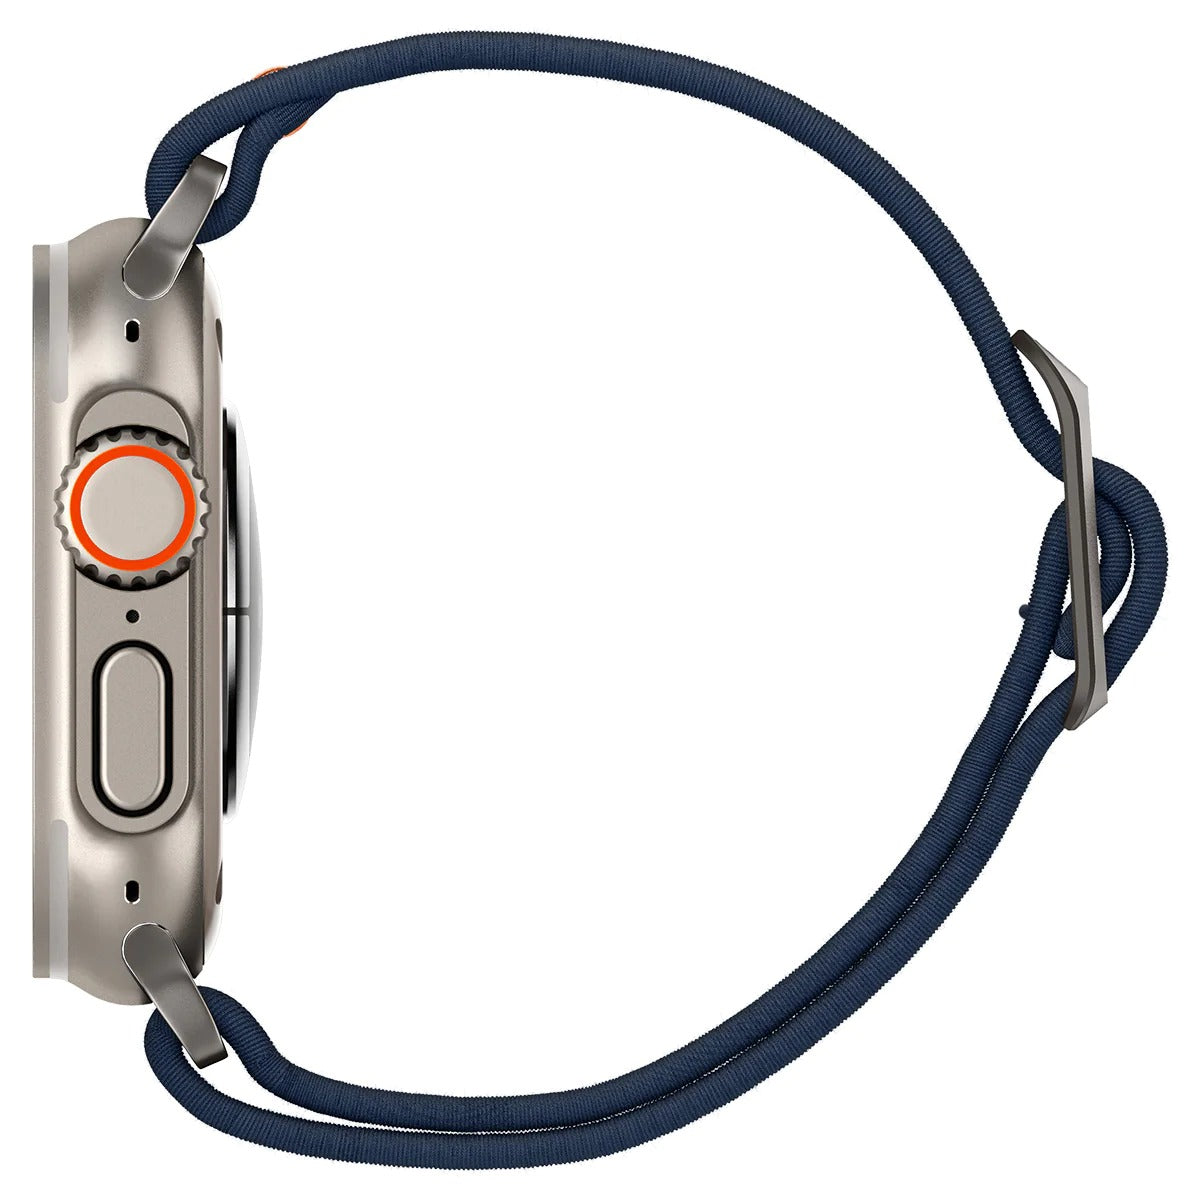 Armband Spigen Lite Fit Ultra für Apple Watch 49/45/44/42 mm, Dunkelblau